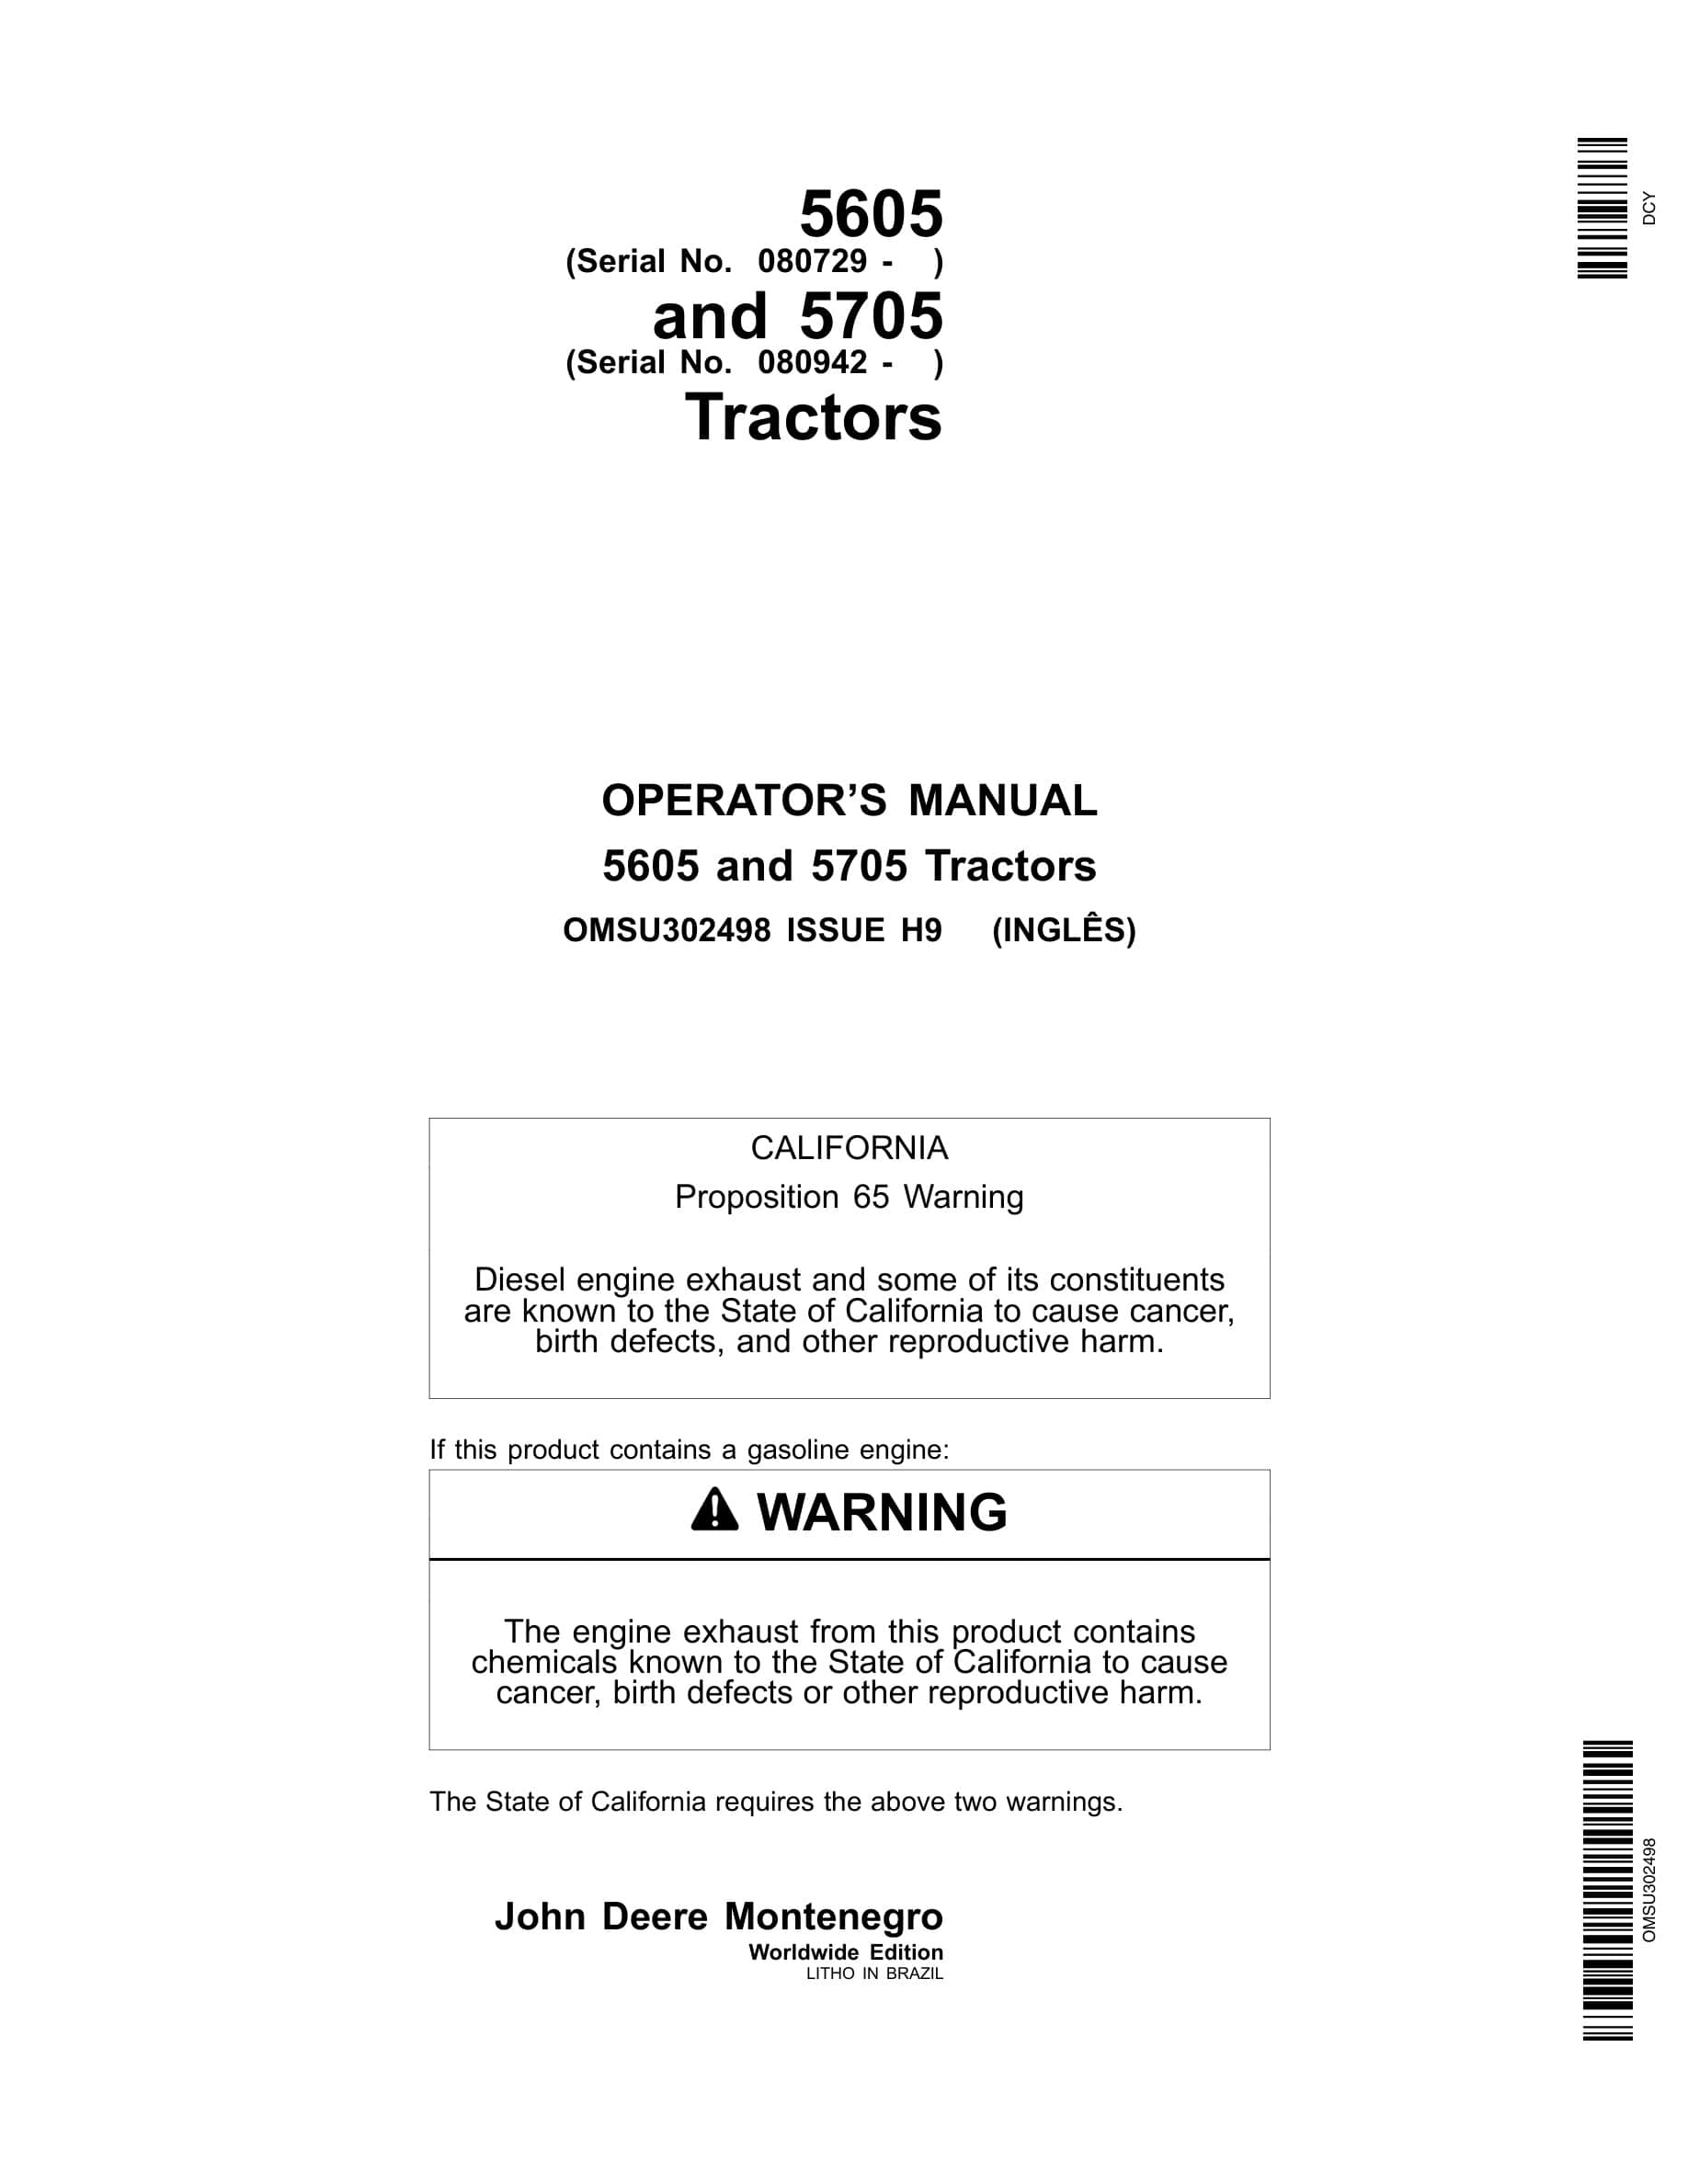 John Deere 5605 And 5705 Tractors Operator Manuals OMSU302498-1